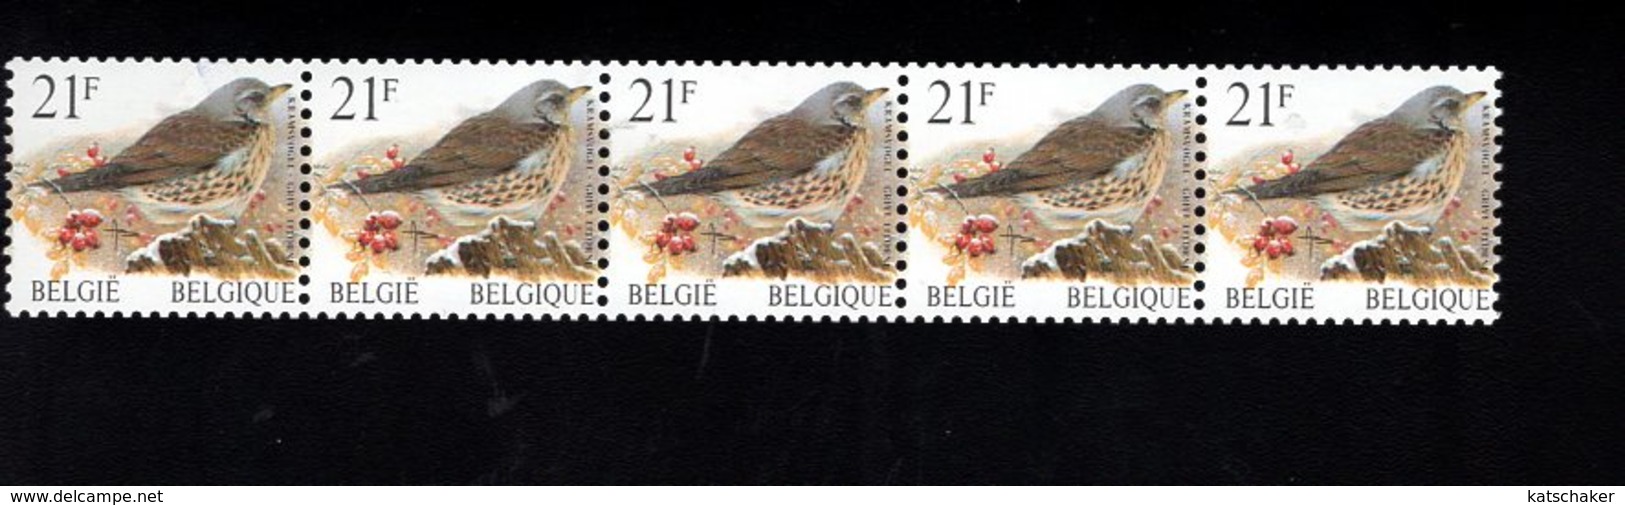 703890277 BELGIUM POSTFRIS MINT NEVER HINGED POSTFRISCH EINWANDFREI OCB R89 BIRD KRAMSVOGEL - Coil Stamps